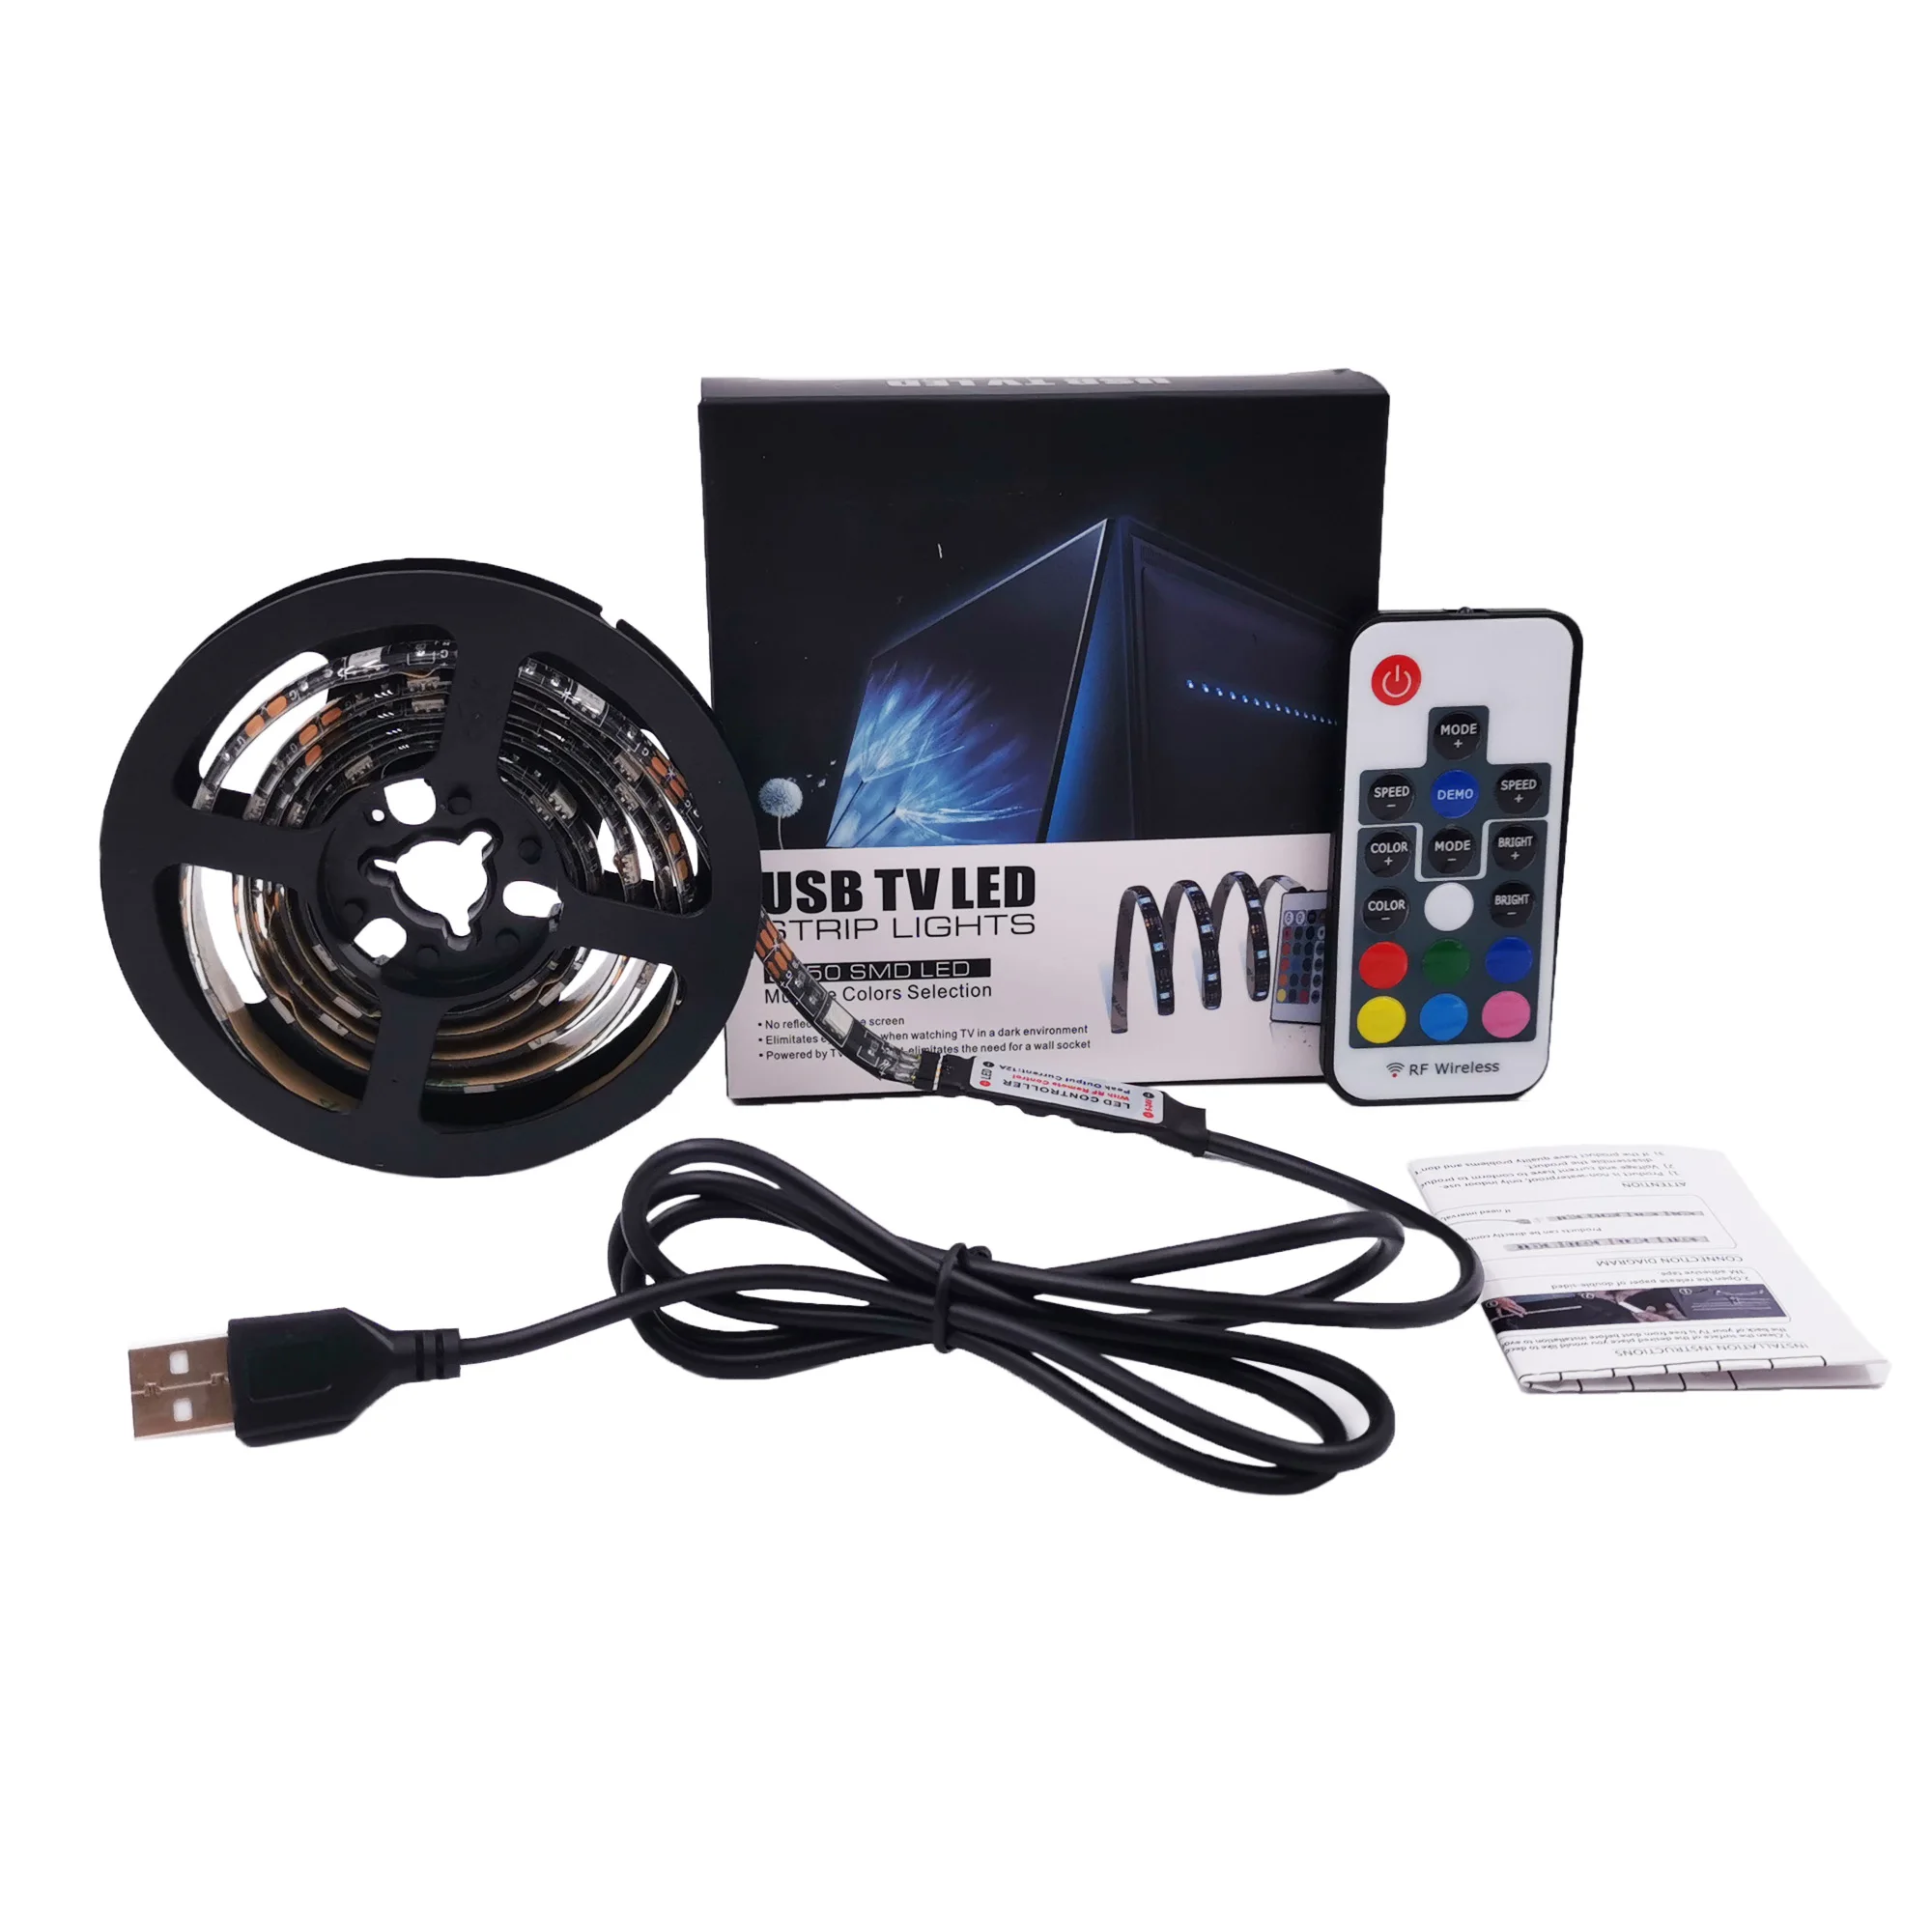 Waterproof SMD5050 RGB led USB strip light TV back lighting kit